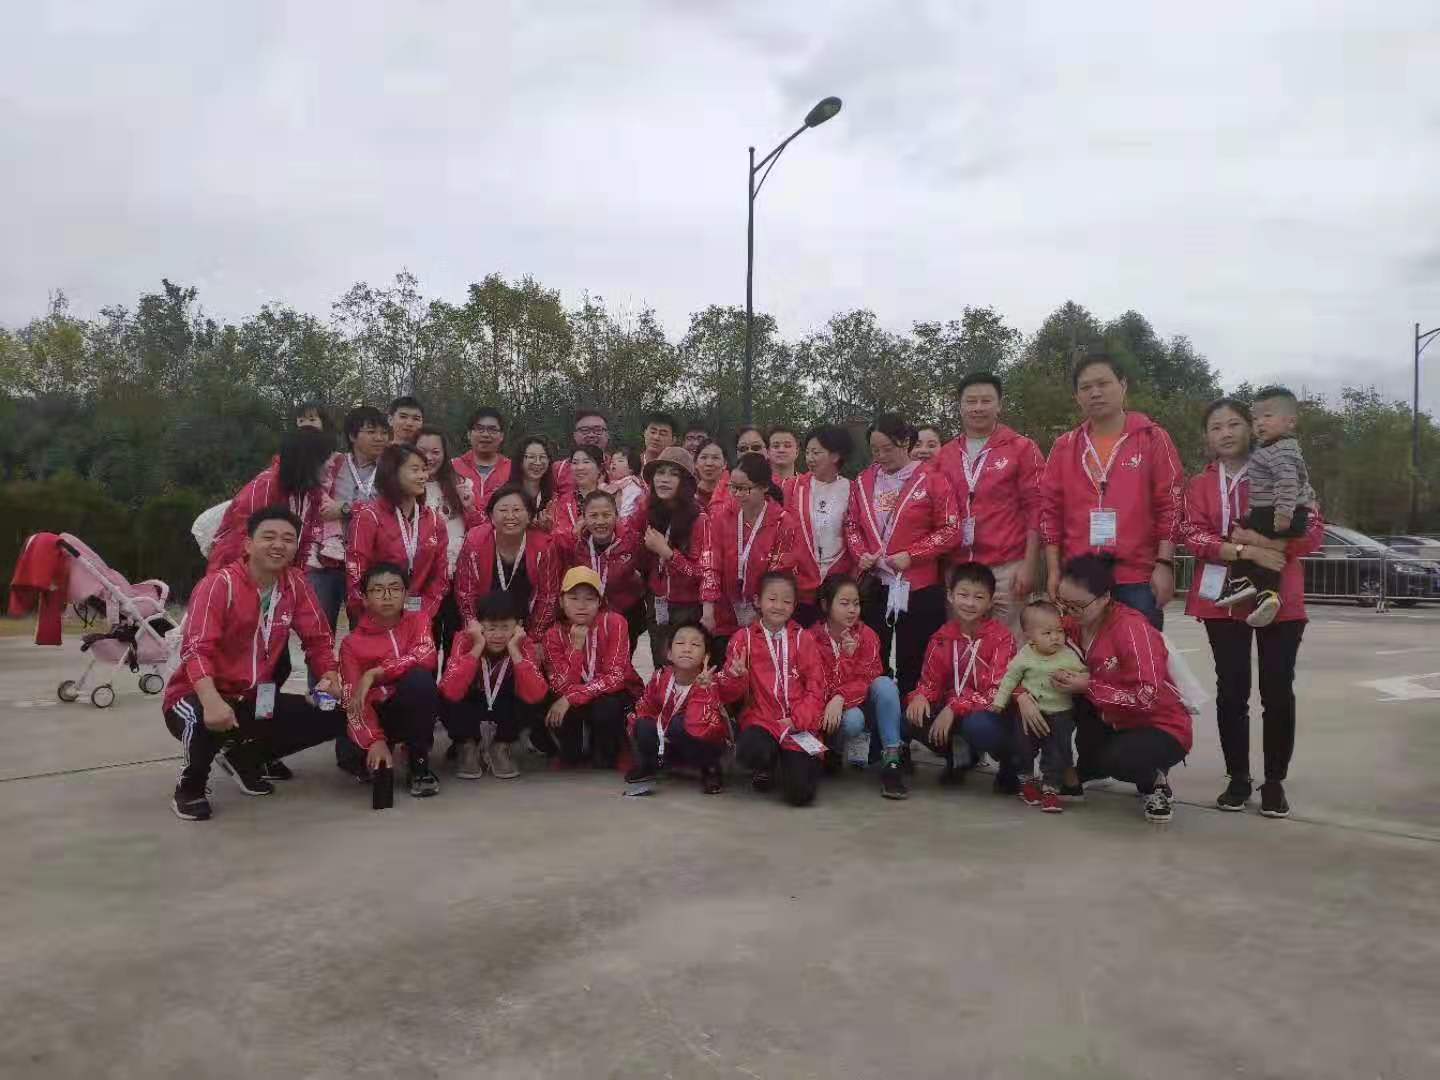 Employees from SIMP took part in Good Deeds Walk